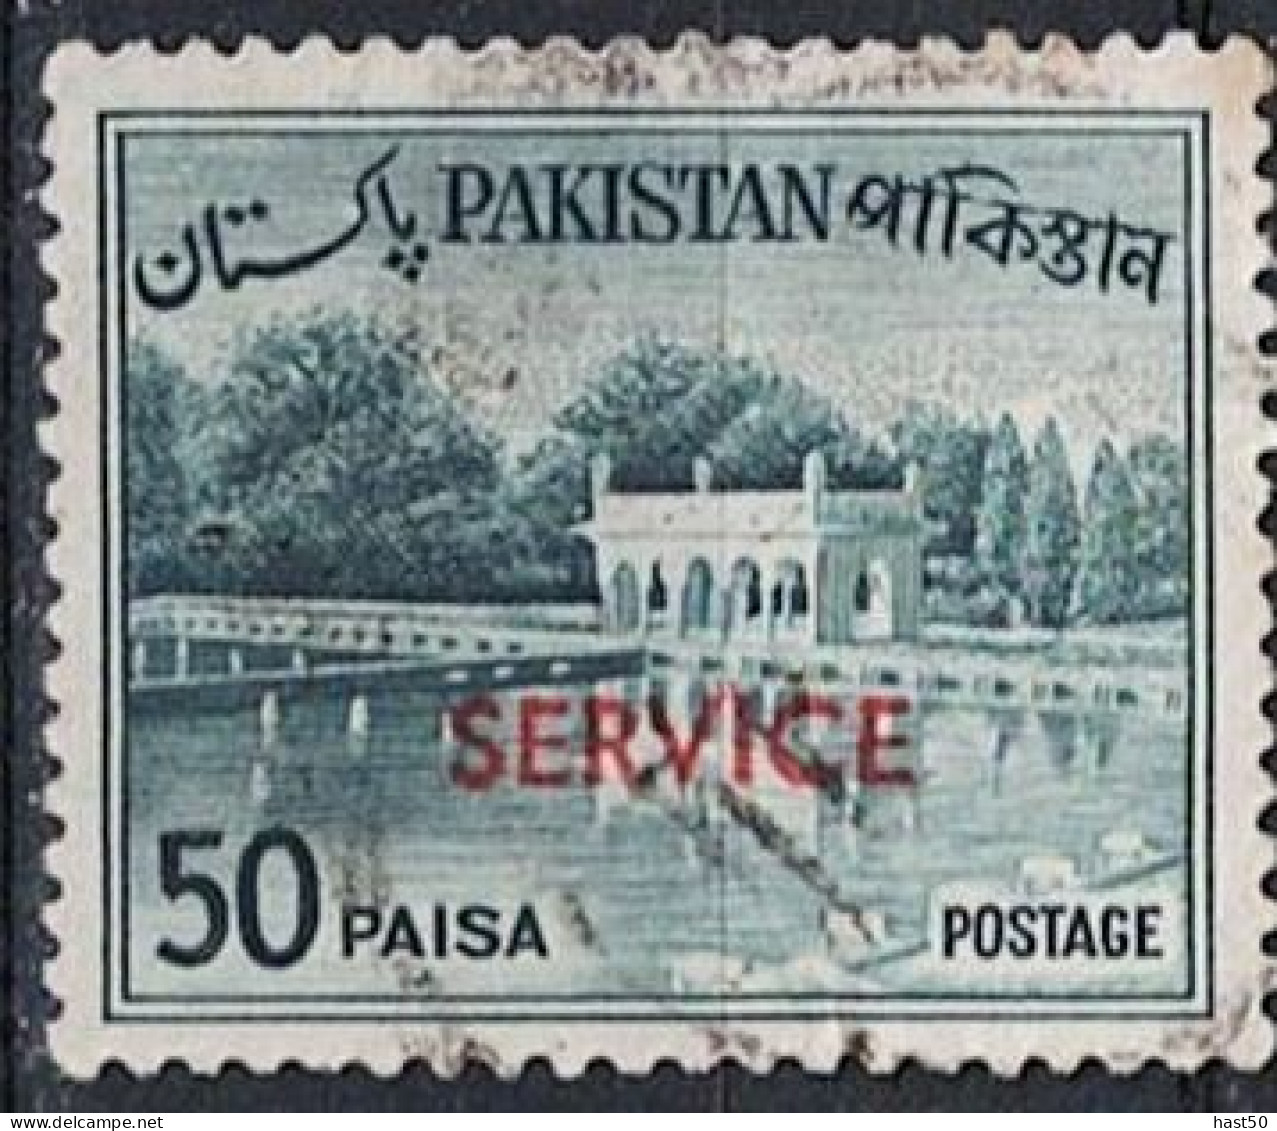 Pakistan - Dienst Shalimar-Gärten (MiNr: D 91) 1962 - Gest Used Obl - Pakistan